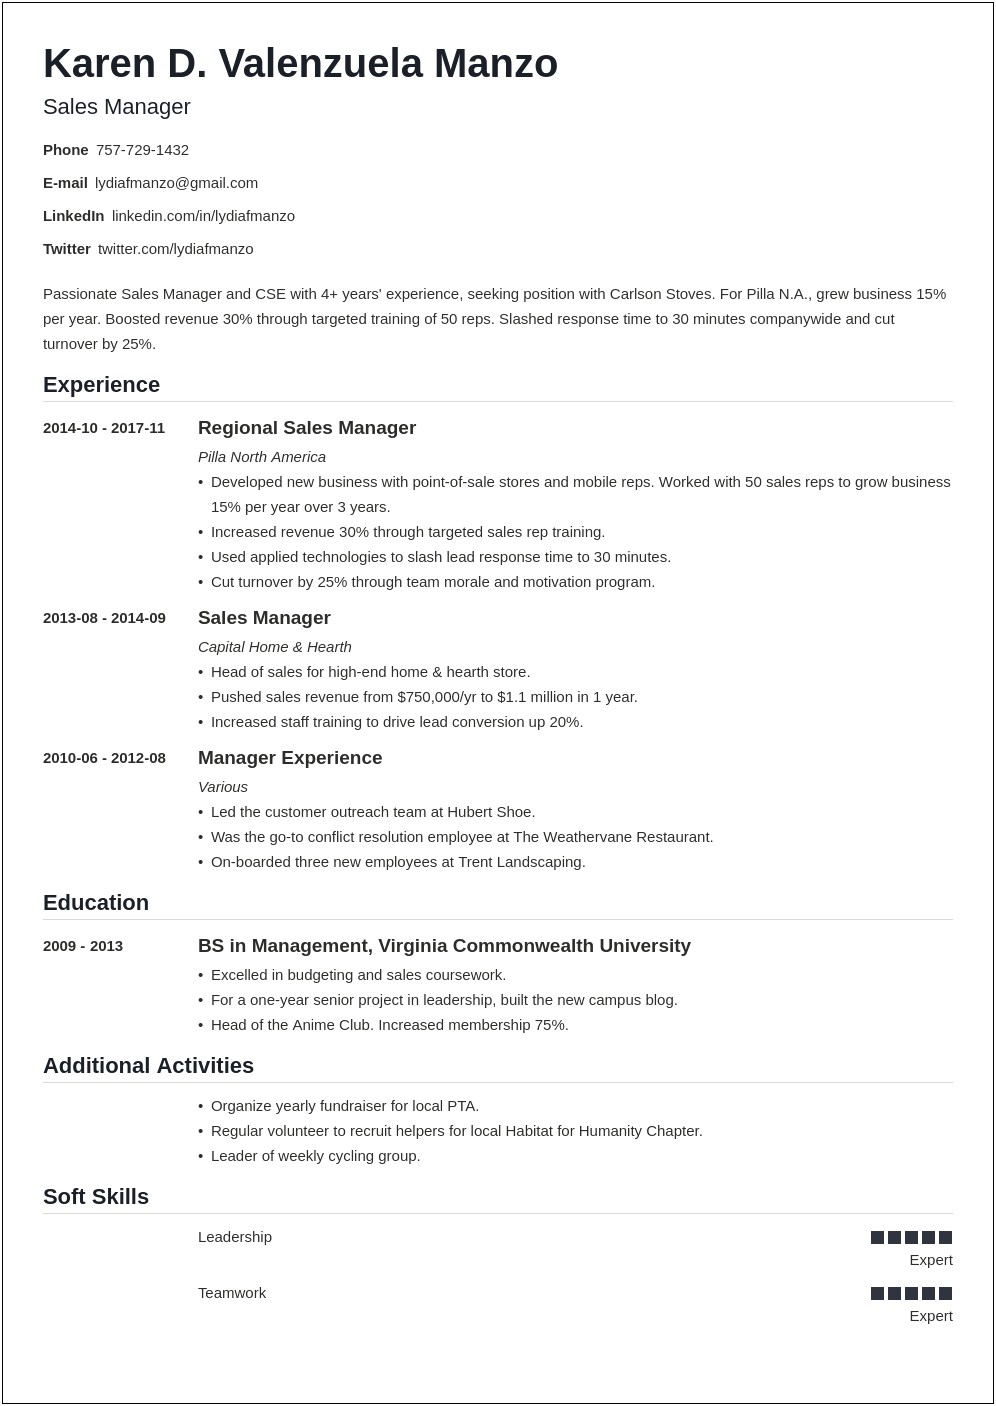 Hiring Manager Job Description Top Resume